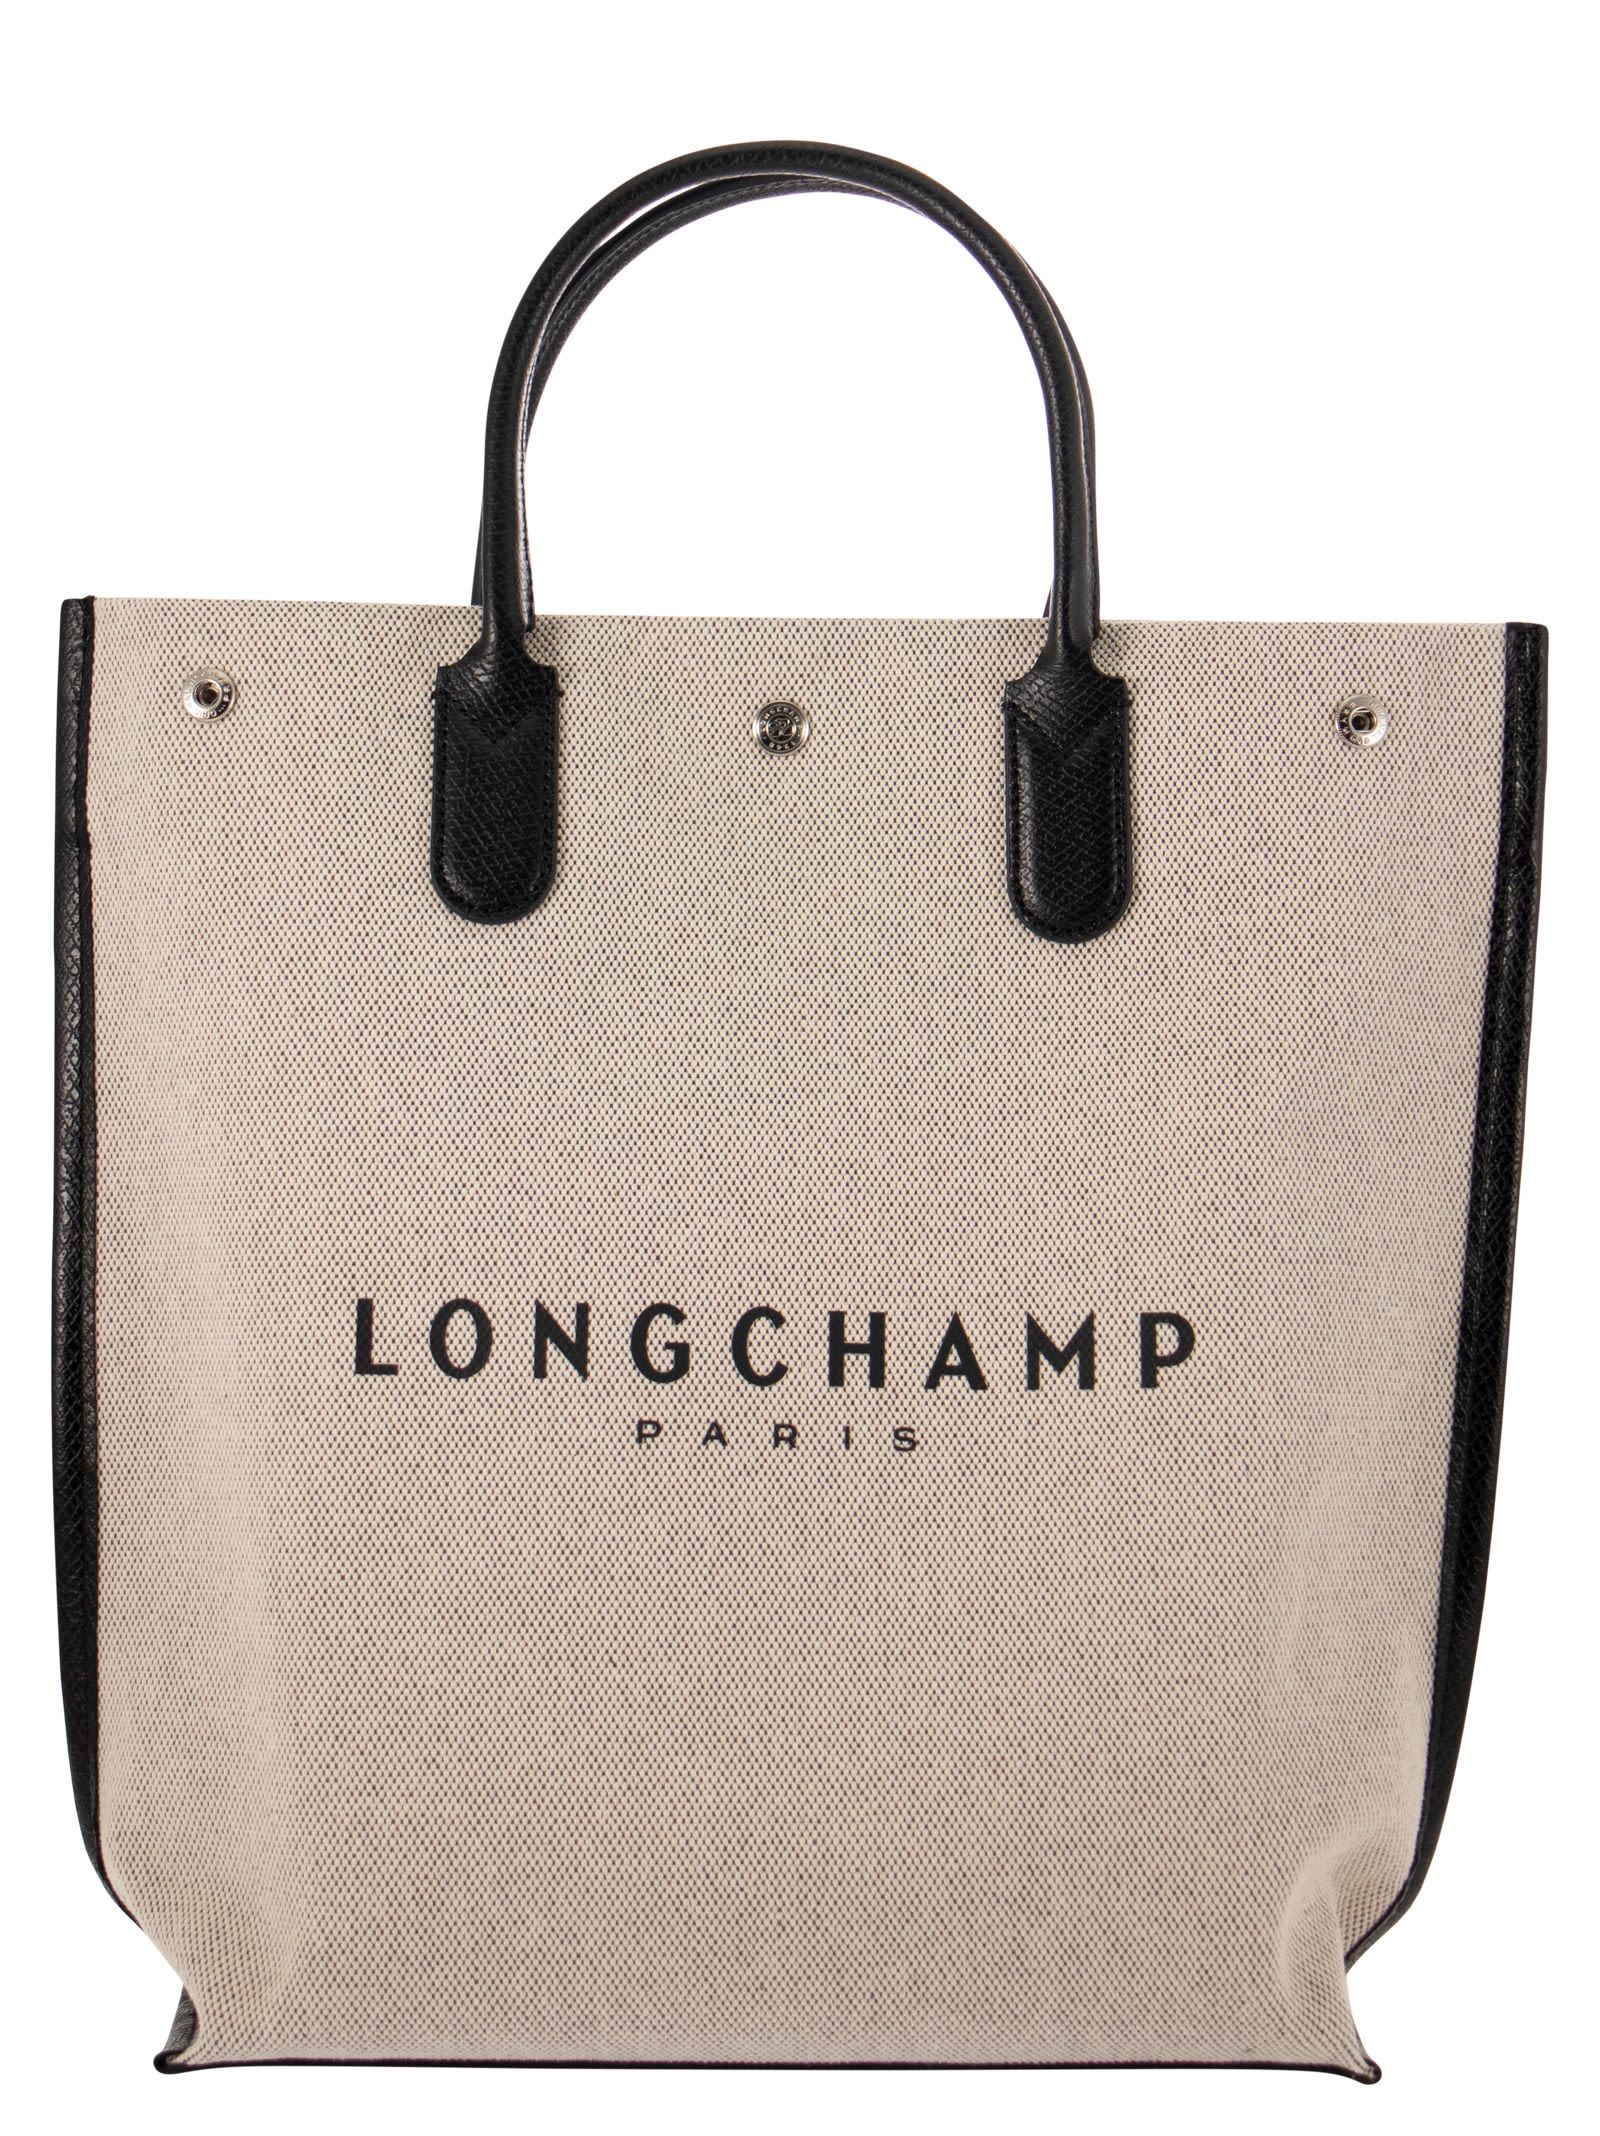 Longchamp Le Pliage Filet Knit Shoulder Bag in Tobacco